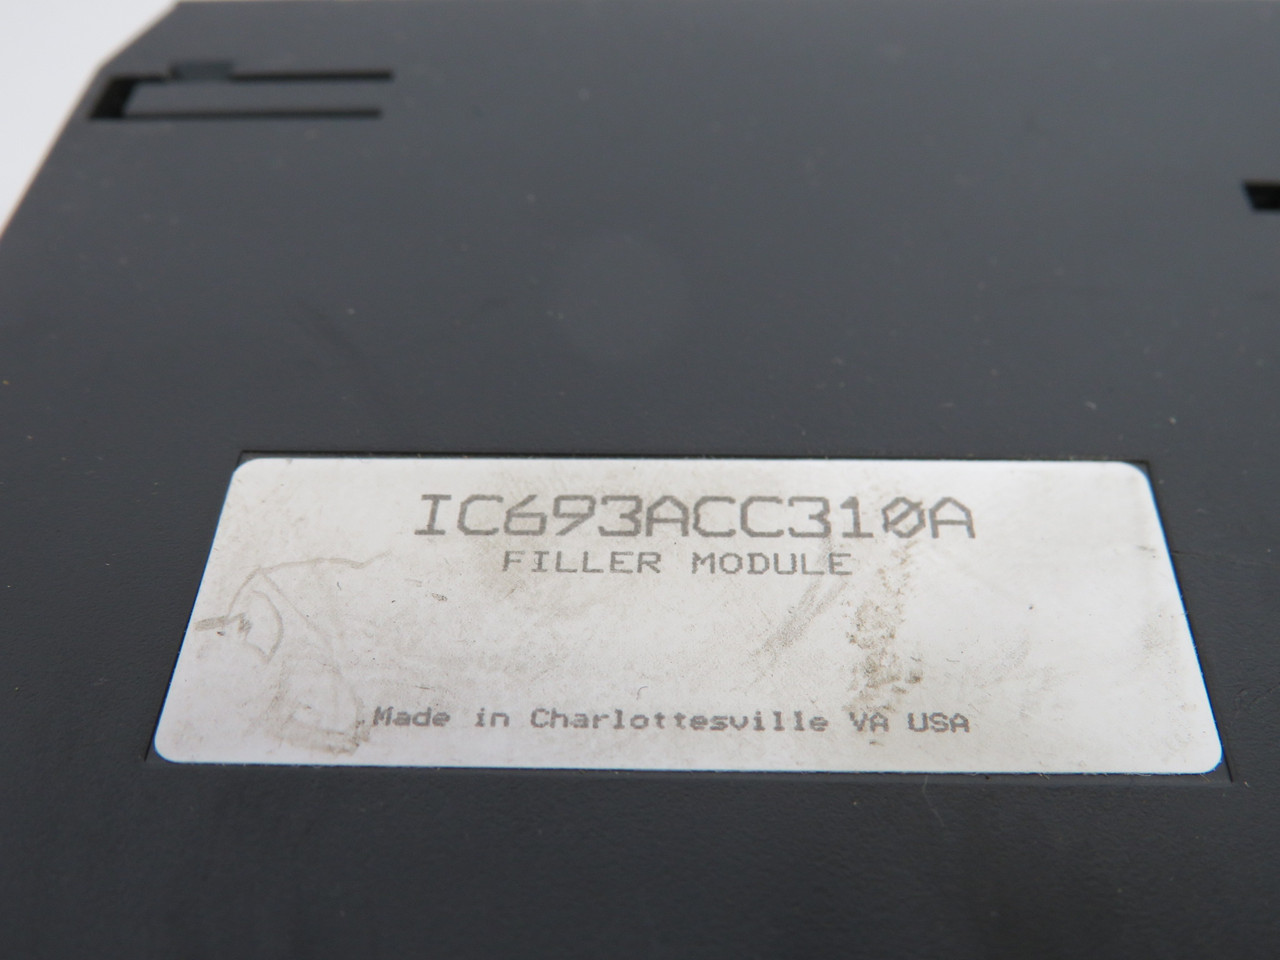 GE Fanuc IC693ACC310A Filler Module NO TERMINAL/MODIFIED USED